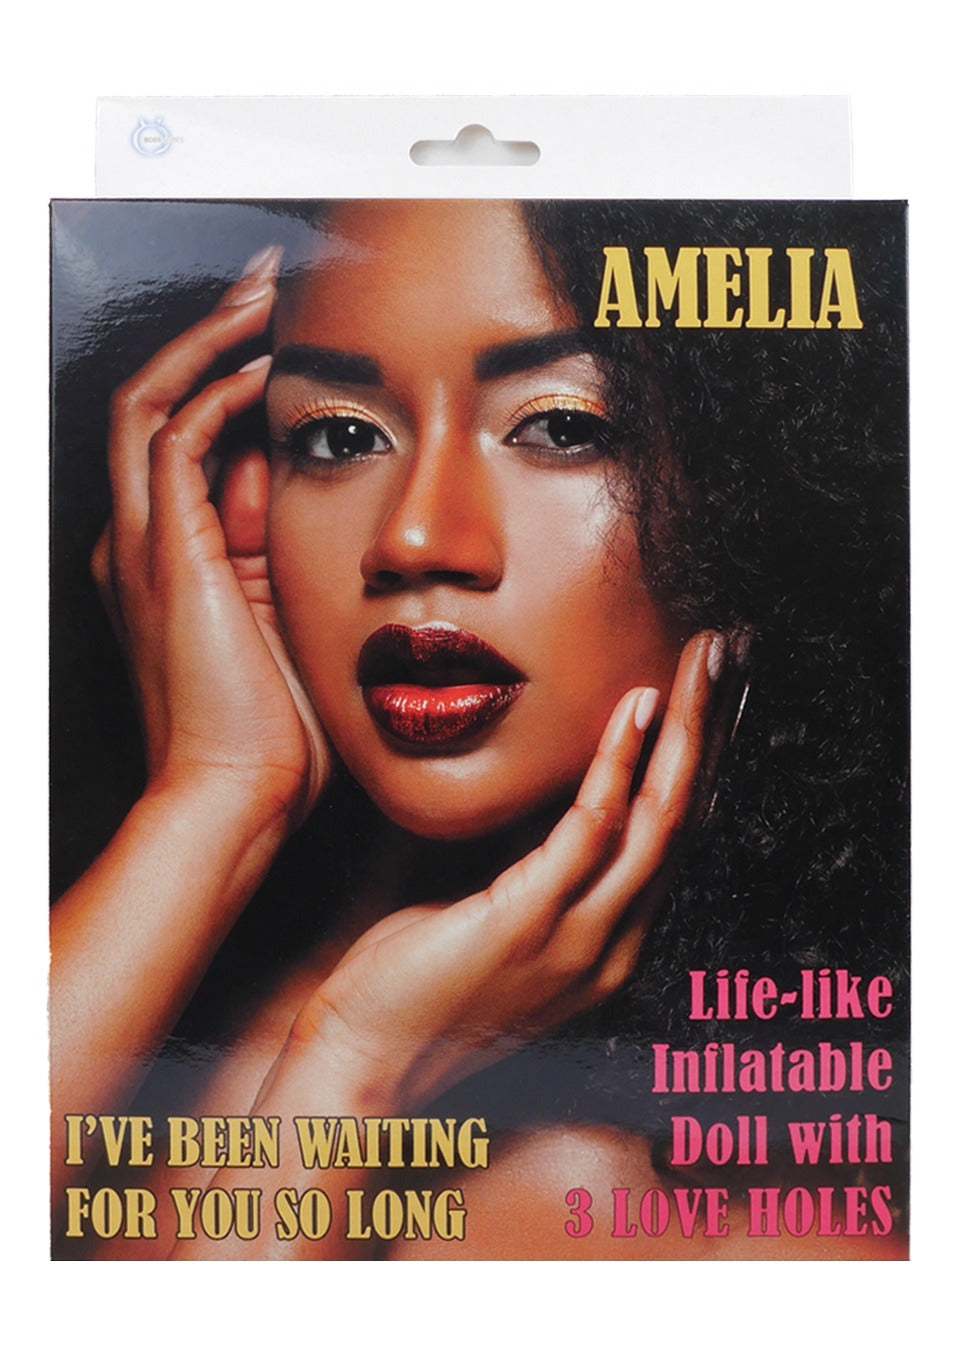 Bossoftoys Amelia Blow Up Love Doll - 150 cm - Black woman - Triple holes - Inflatable Masturbator - 59-00010